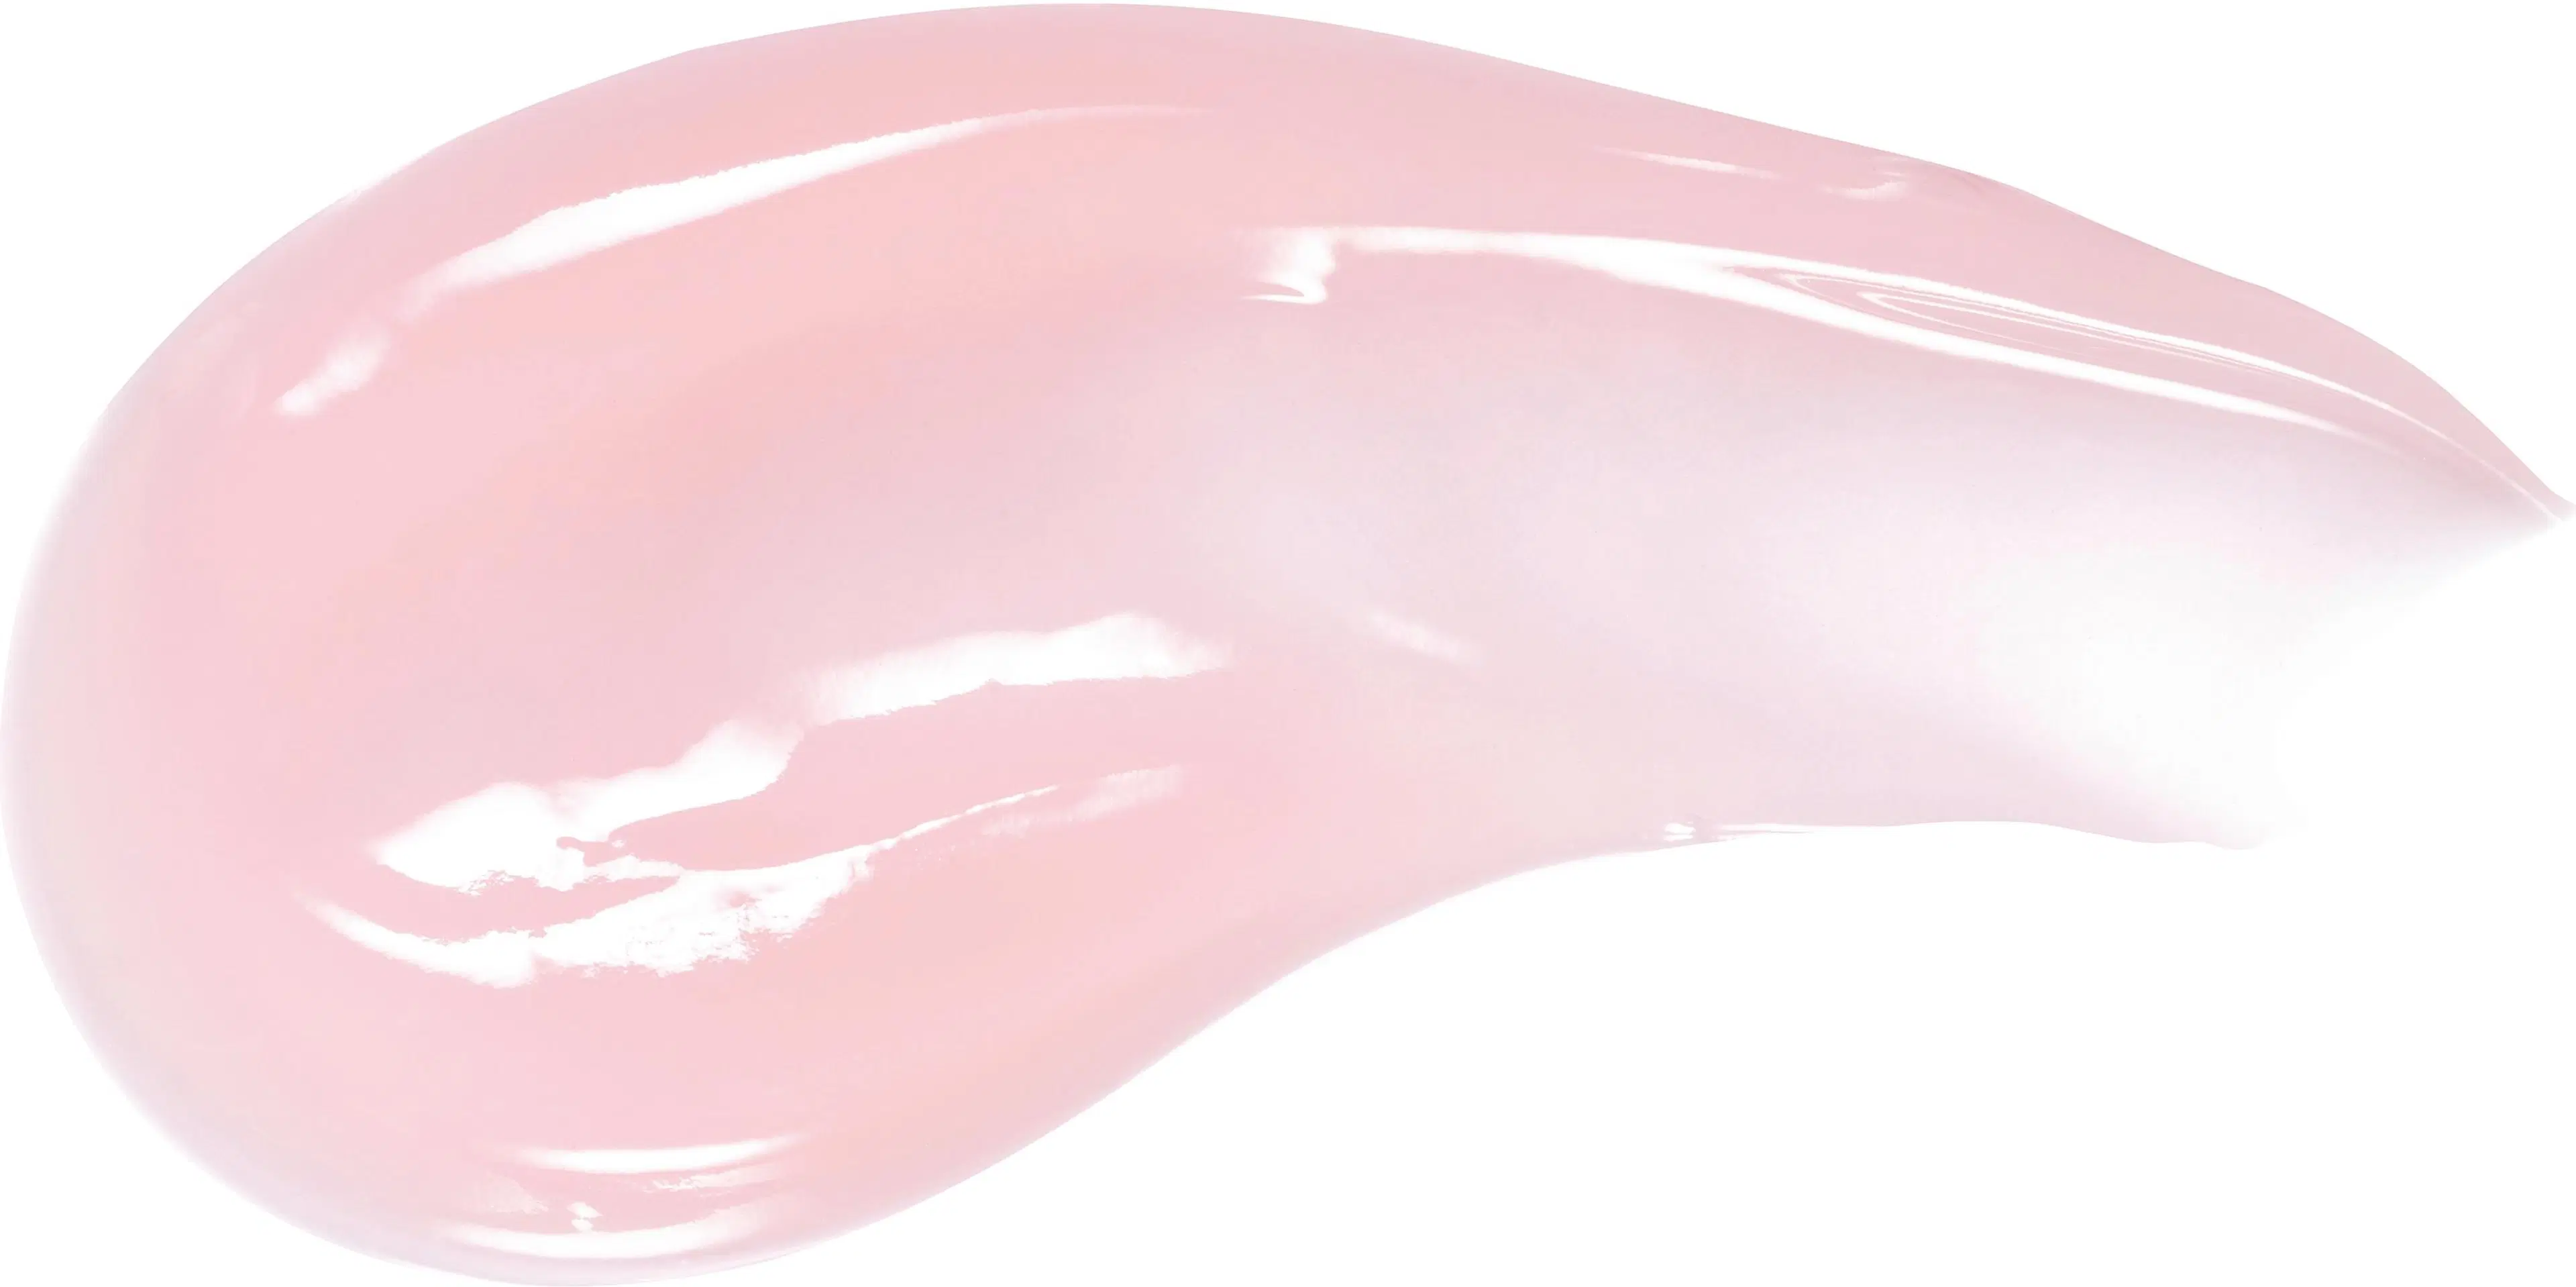 Lancôme L'Absolu Gloss Rosy Plump huulikiilto 7 ml